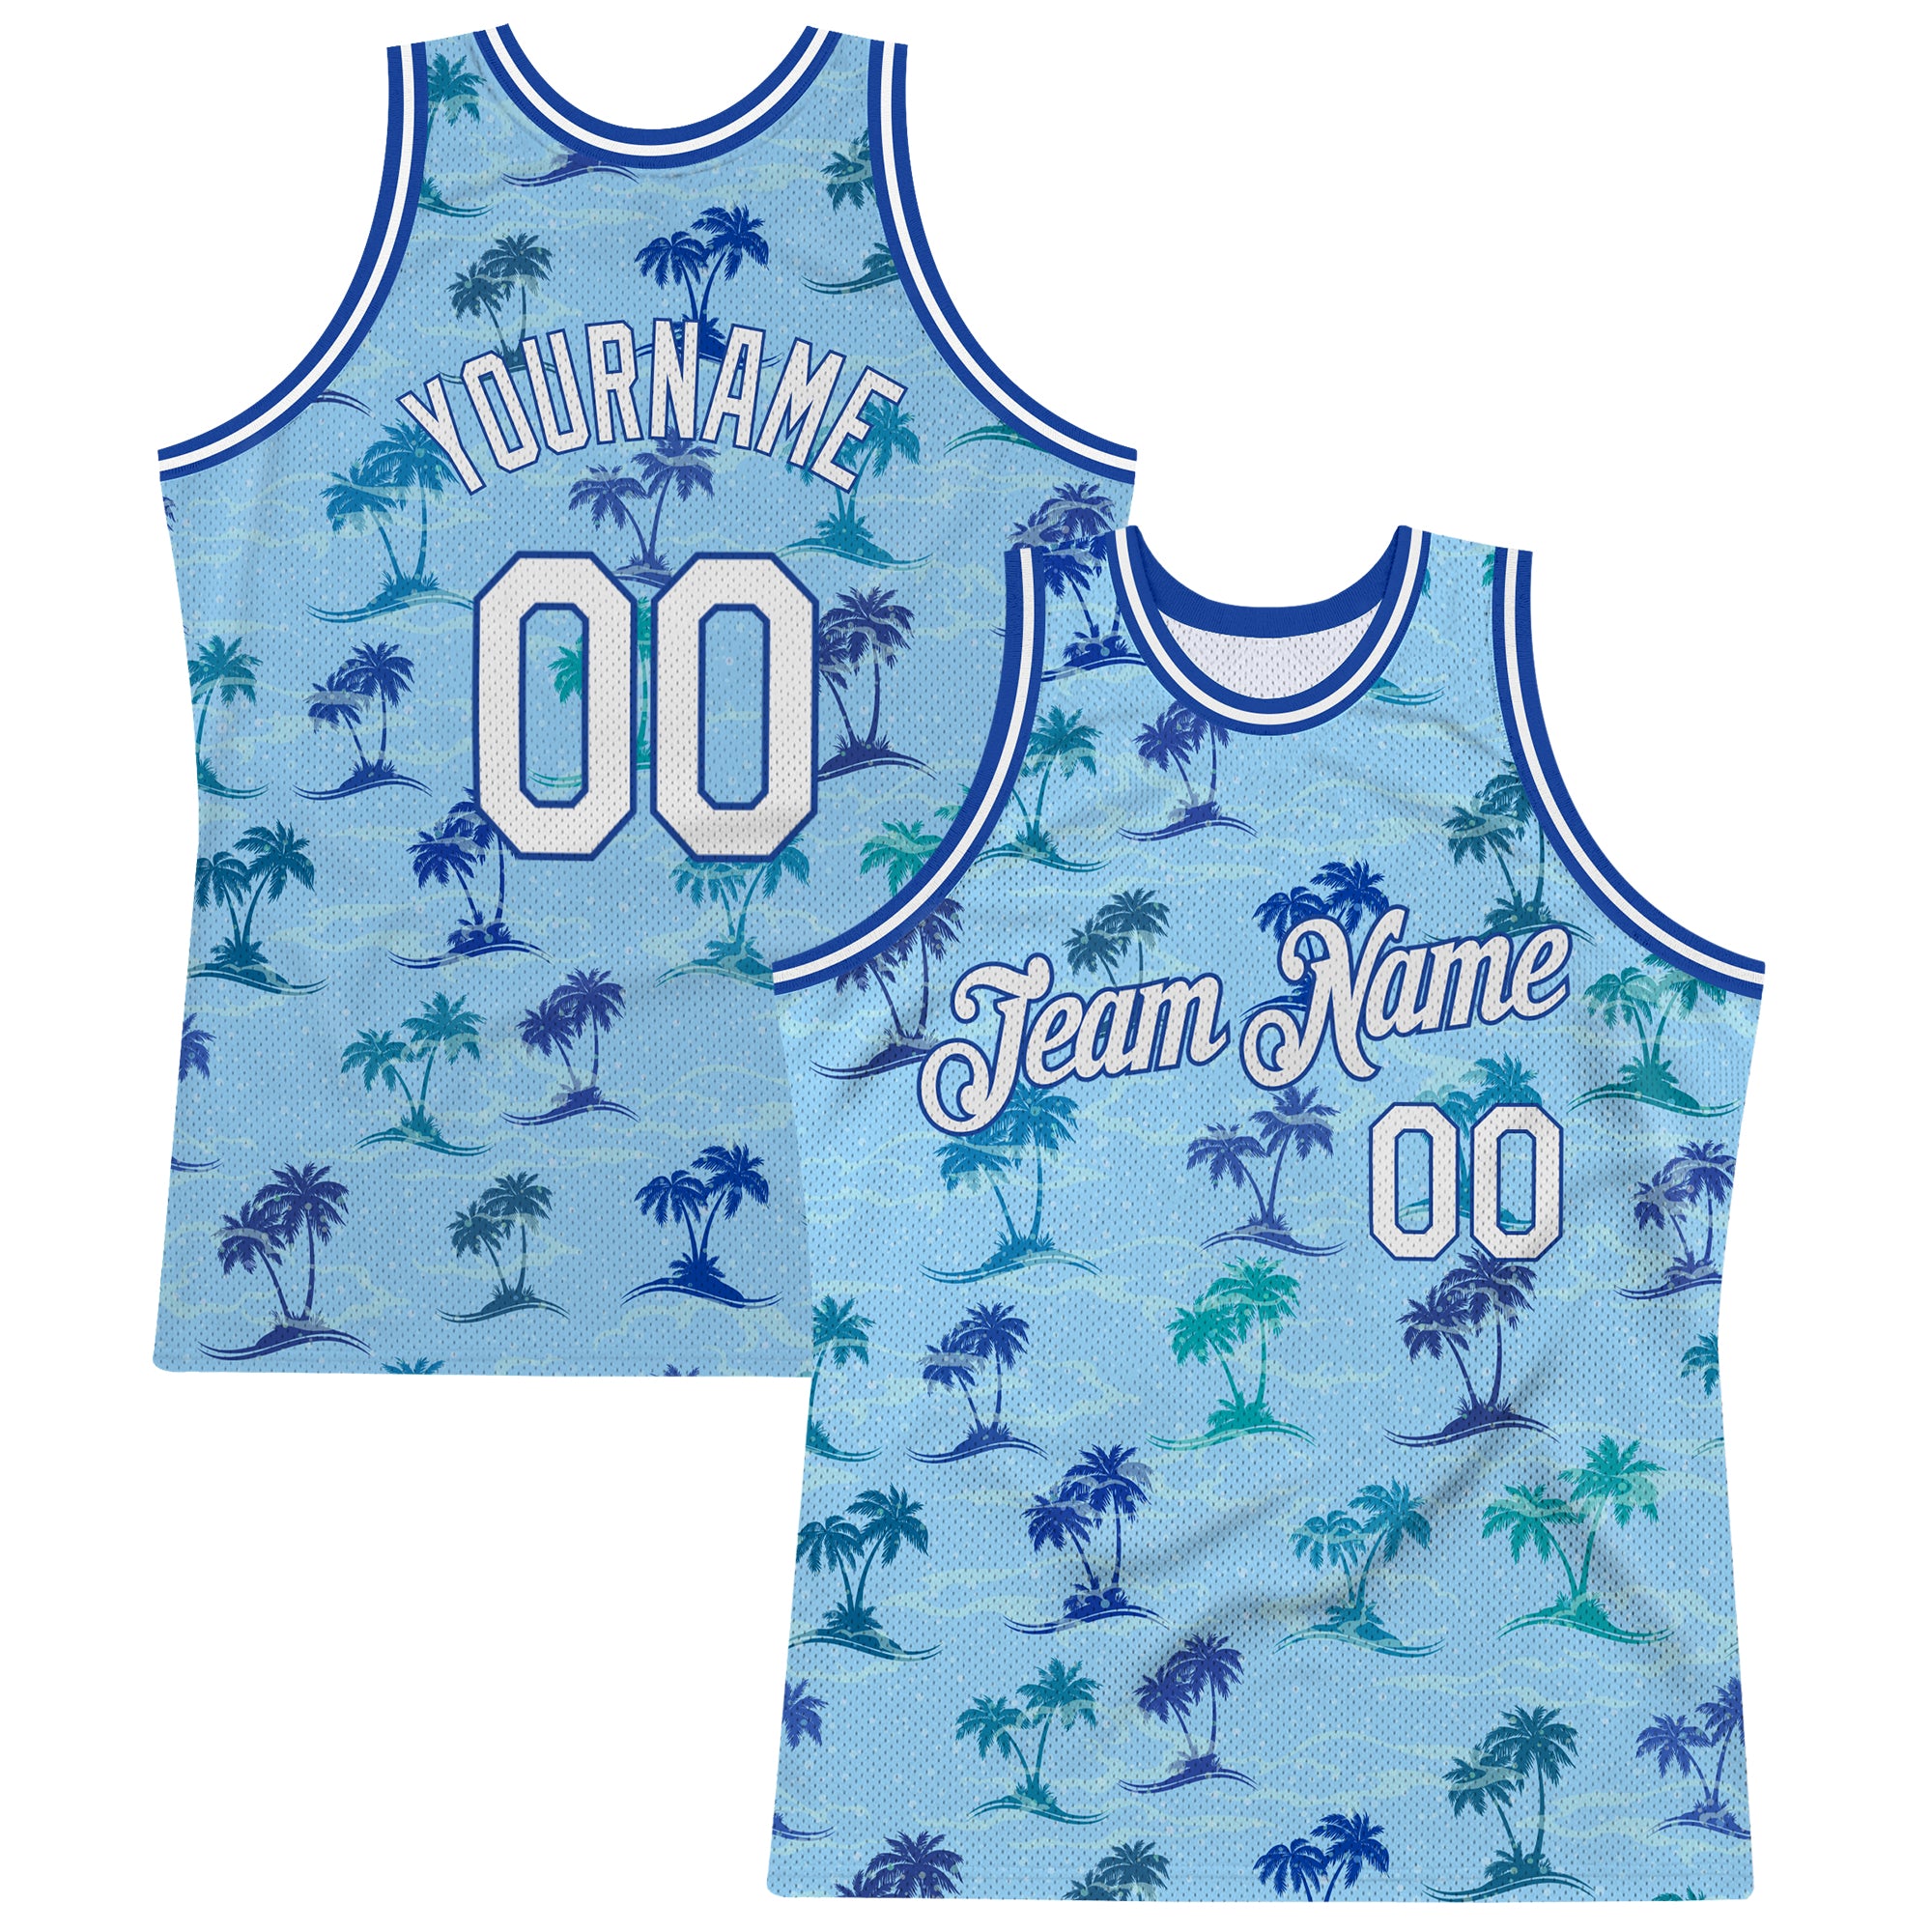 FANSIDEA Custom Light Blue White-Royal 3D Pattern Design Palm Trees Authentic Basketball Jersey Men's Size:3XL